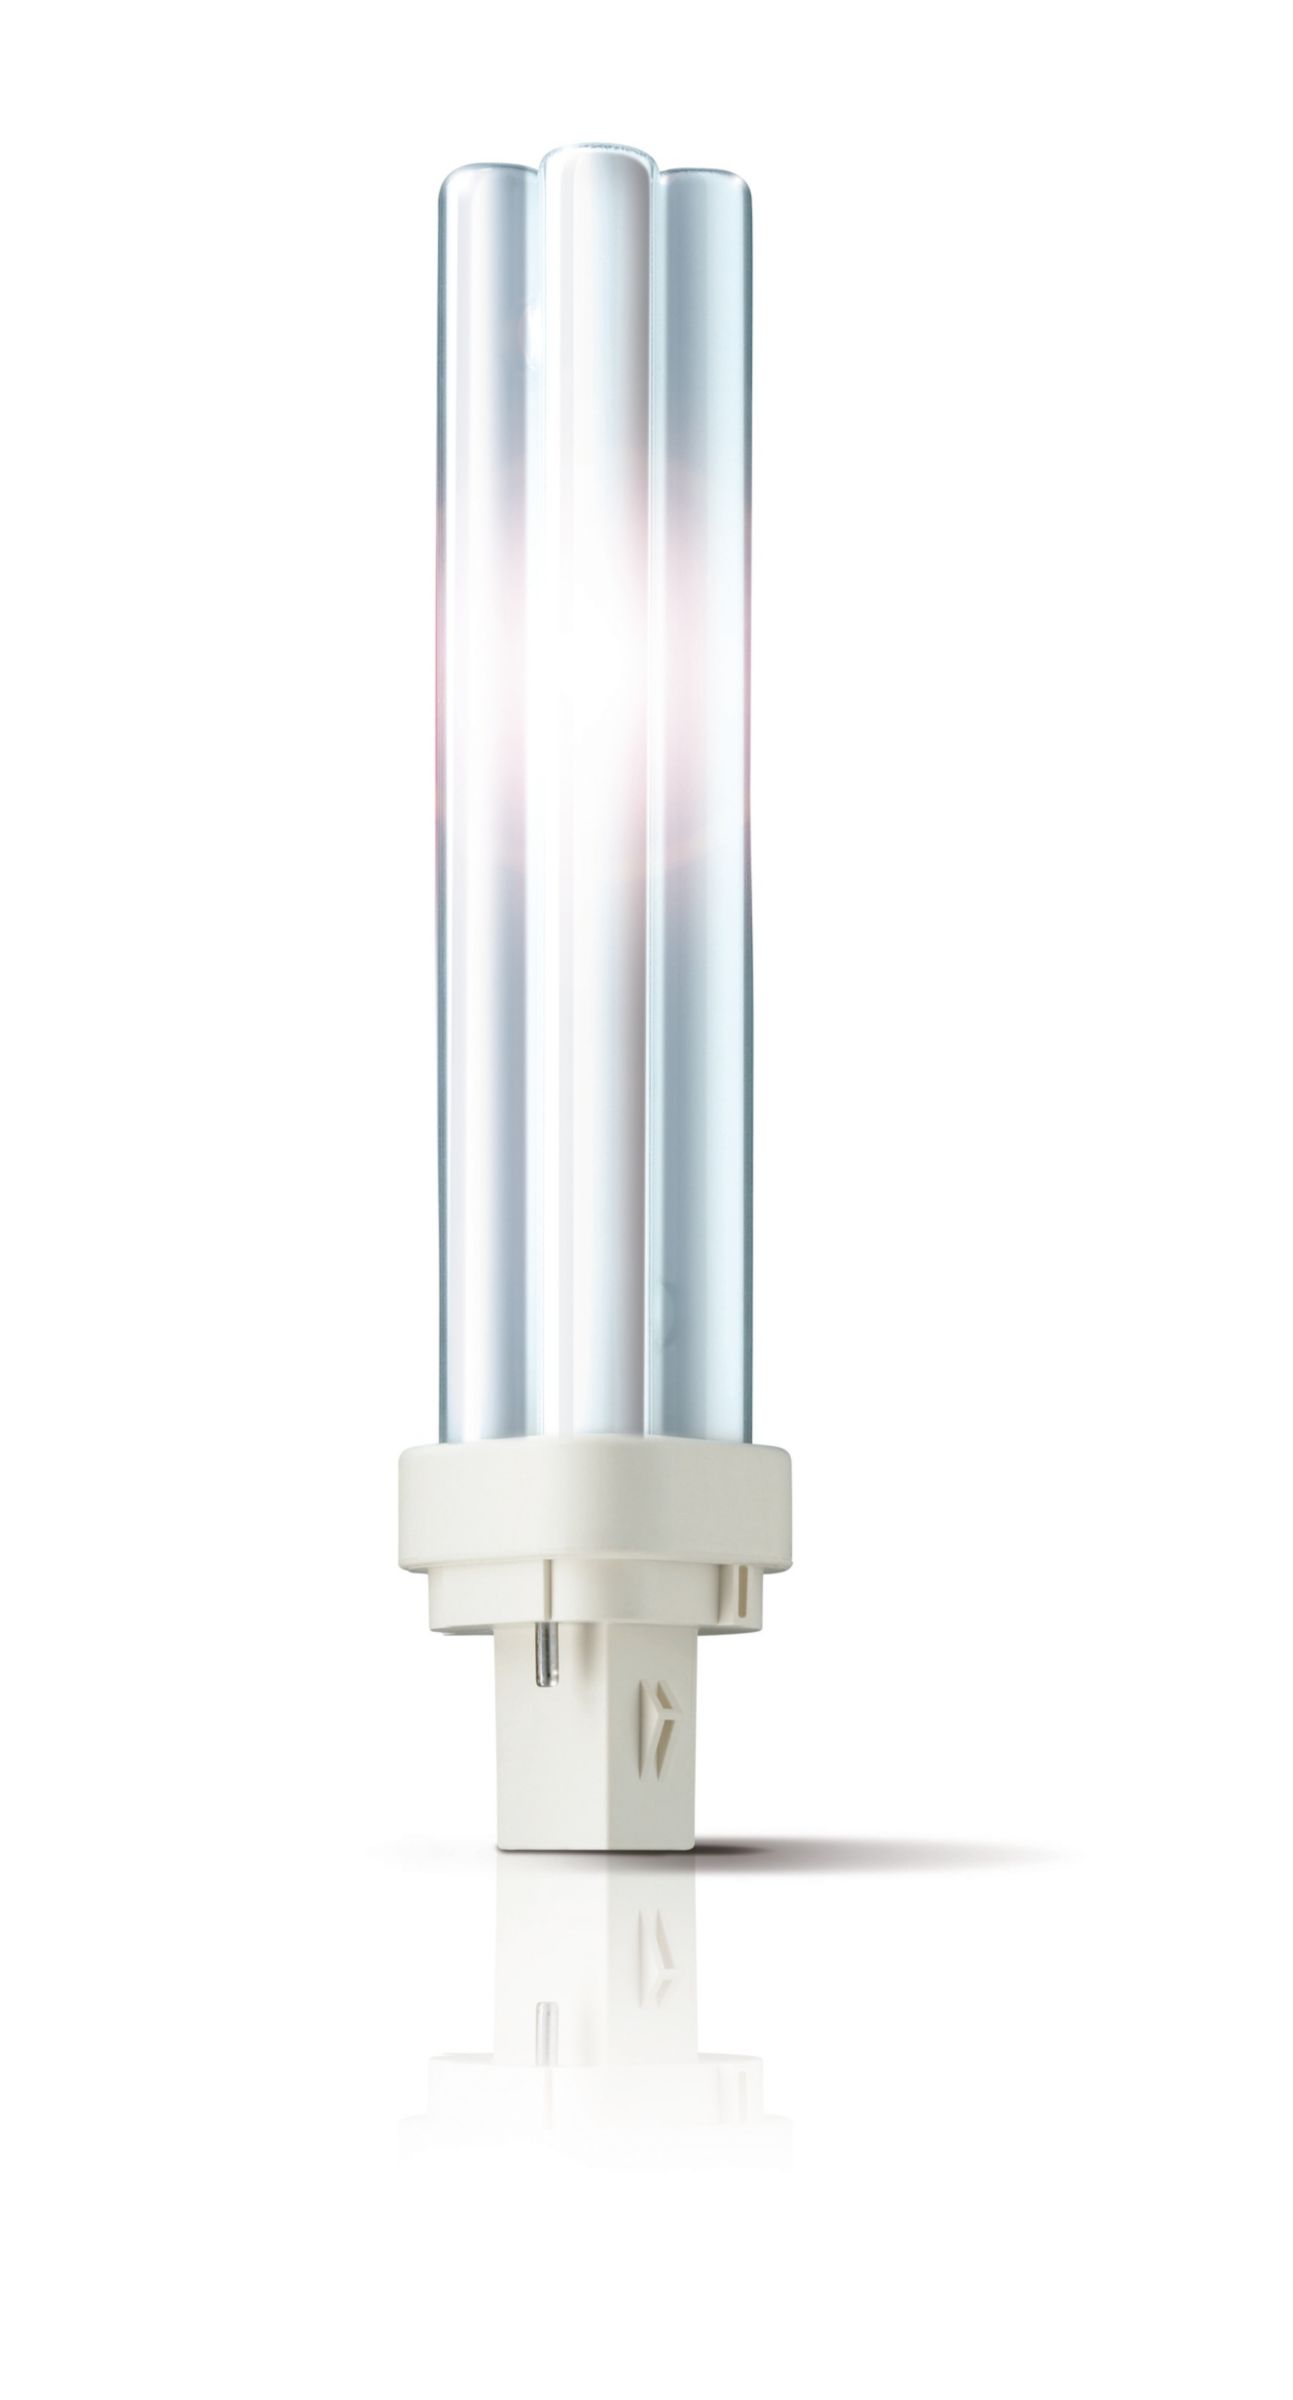 1 Phillips 34953-0 PL-C 26W/27 2 pin compact flourescent lamp bulb 